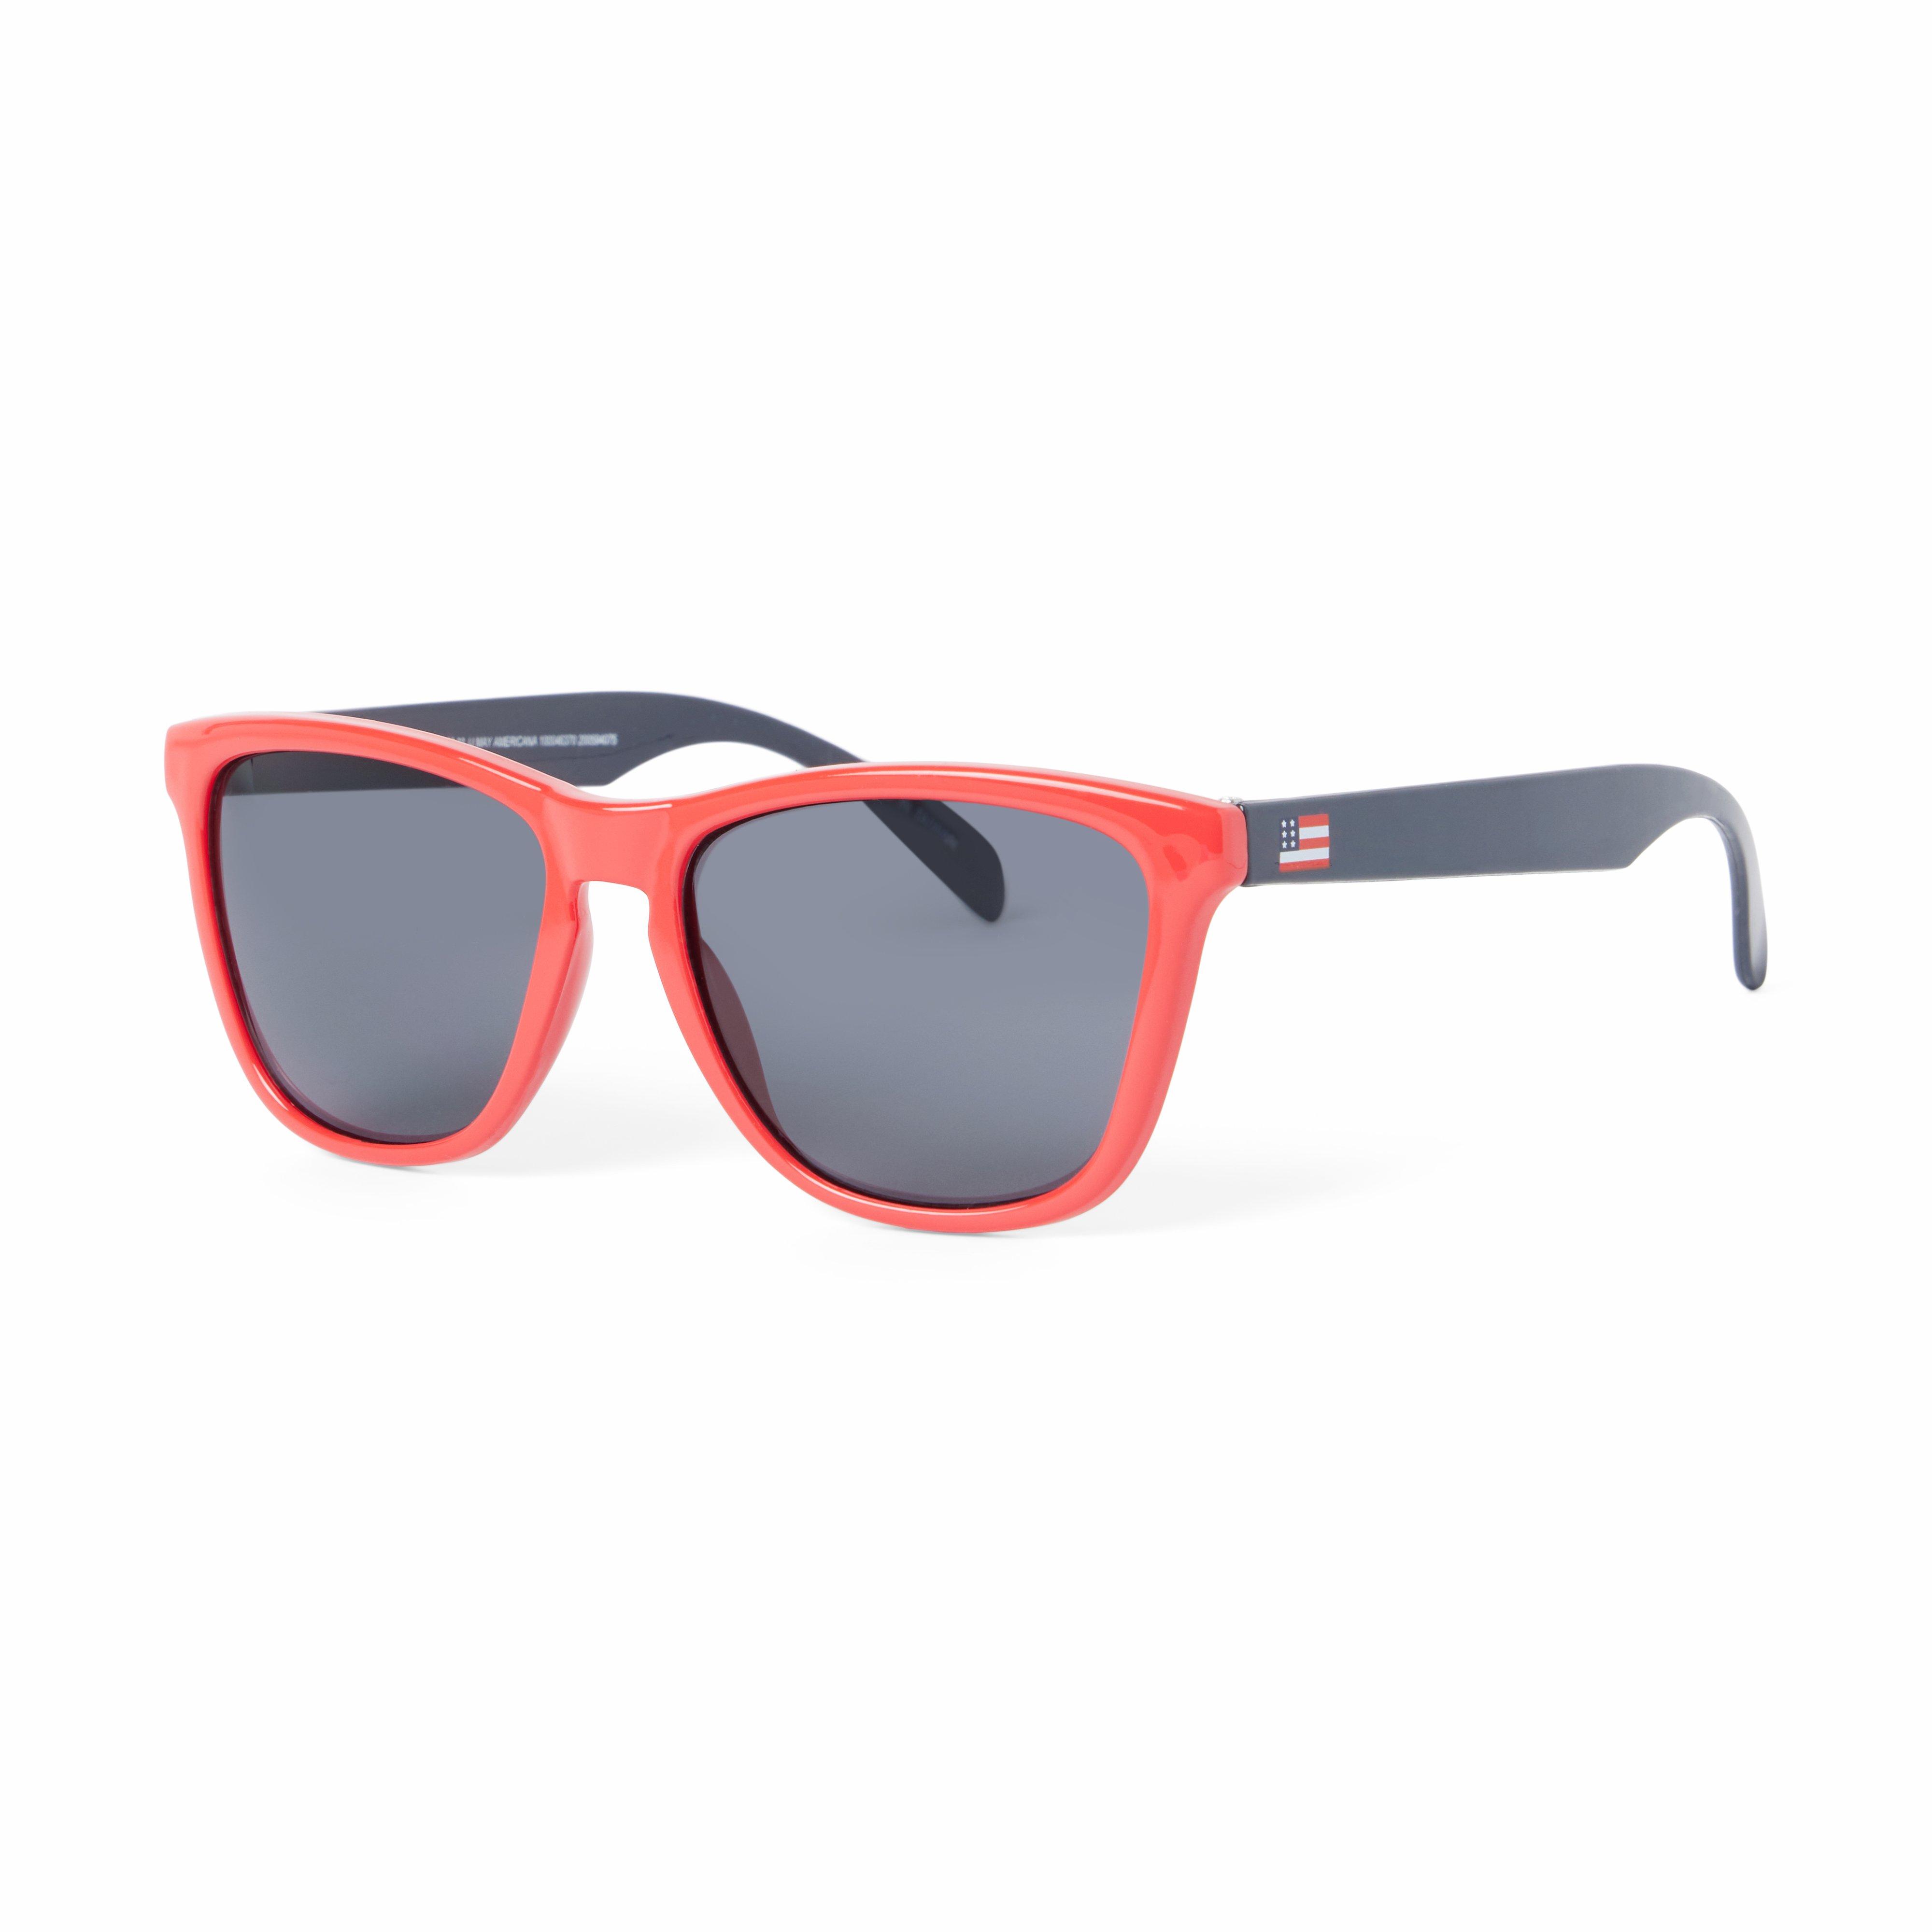 Americana Colorblocked Sunglasses image number 0